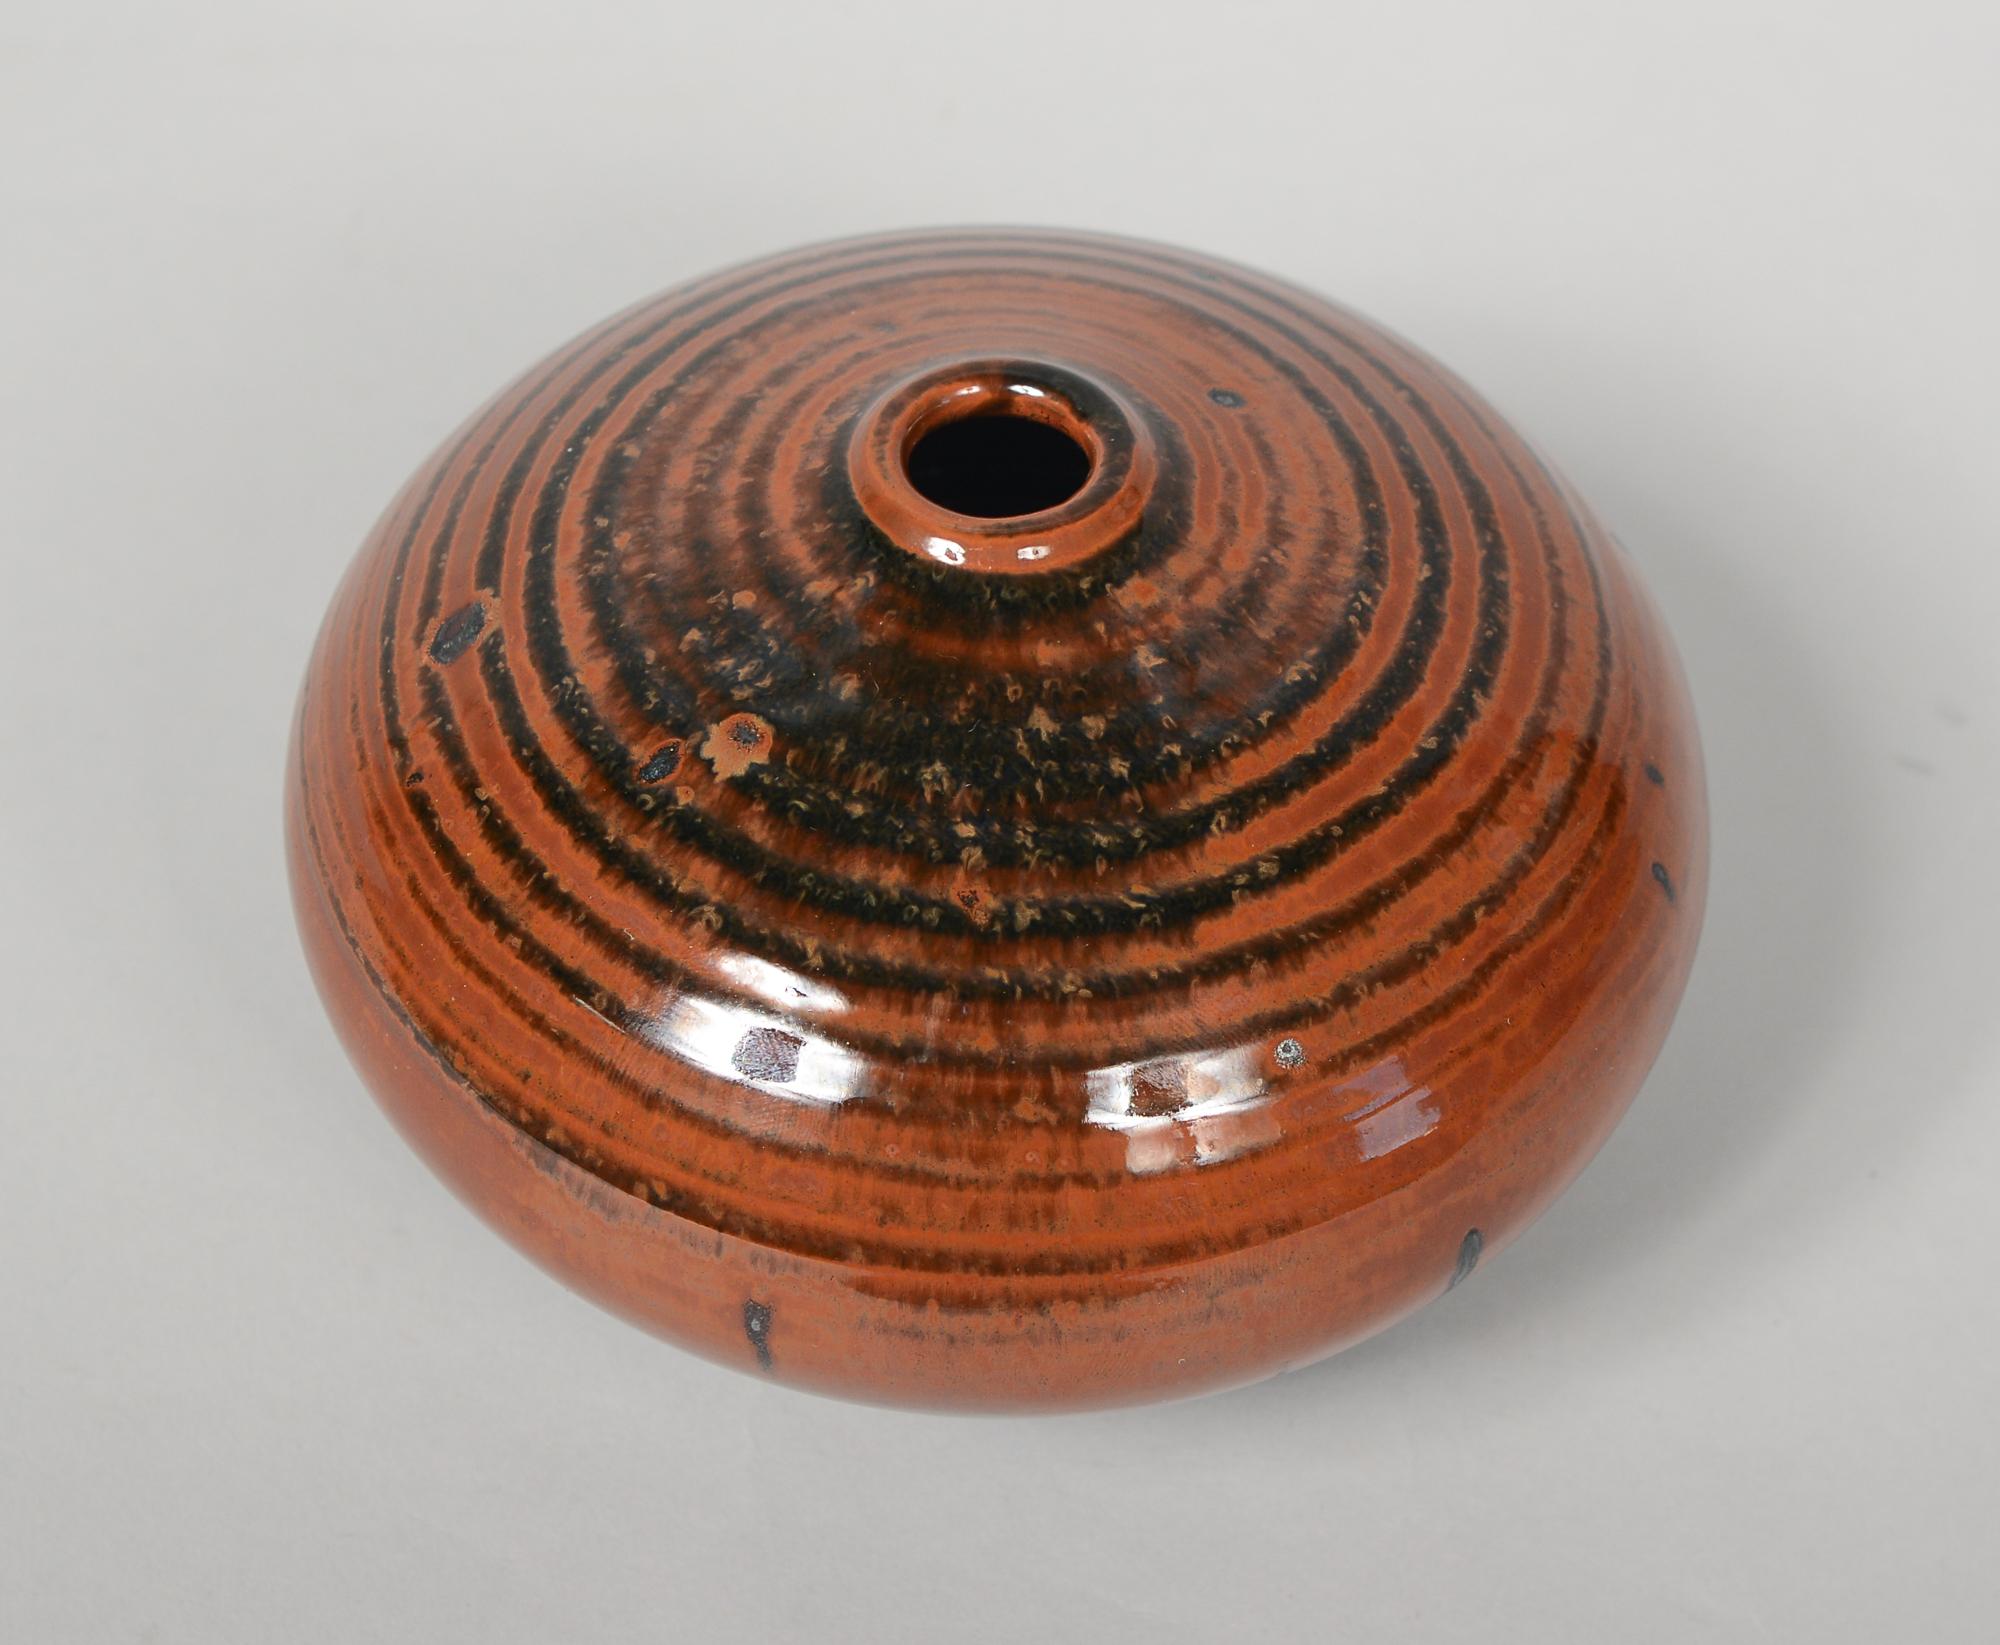 Keramikvase von Vivika und Otto Heino Studio Pottery (20. Jahrhundert) im Angebot